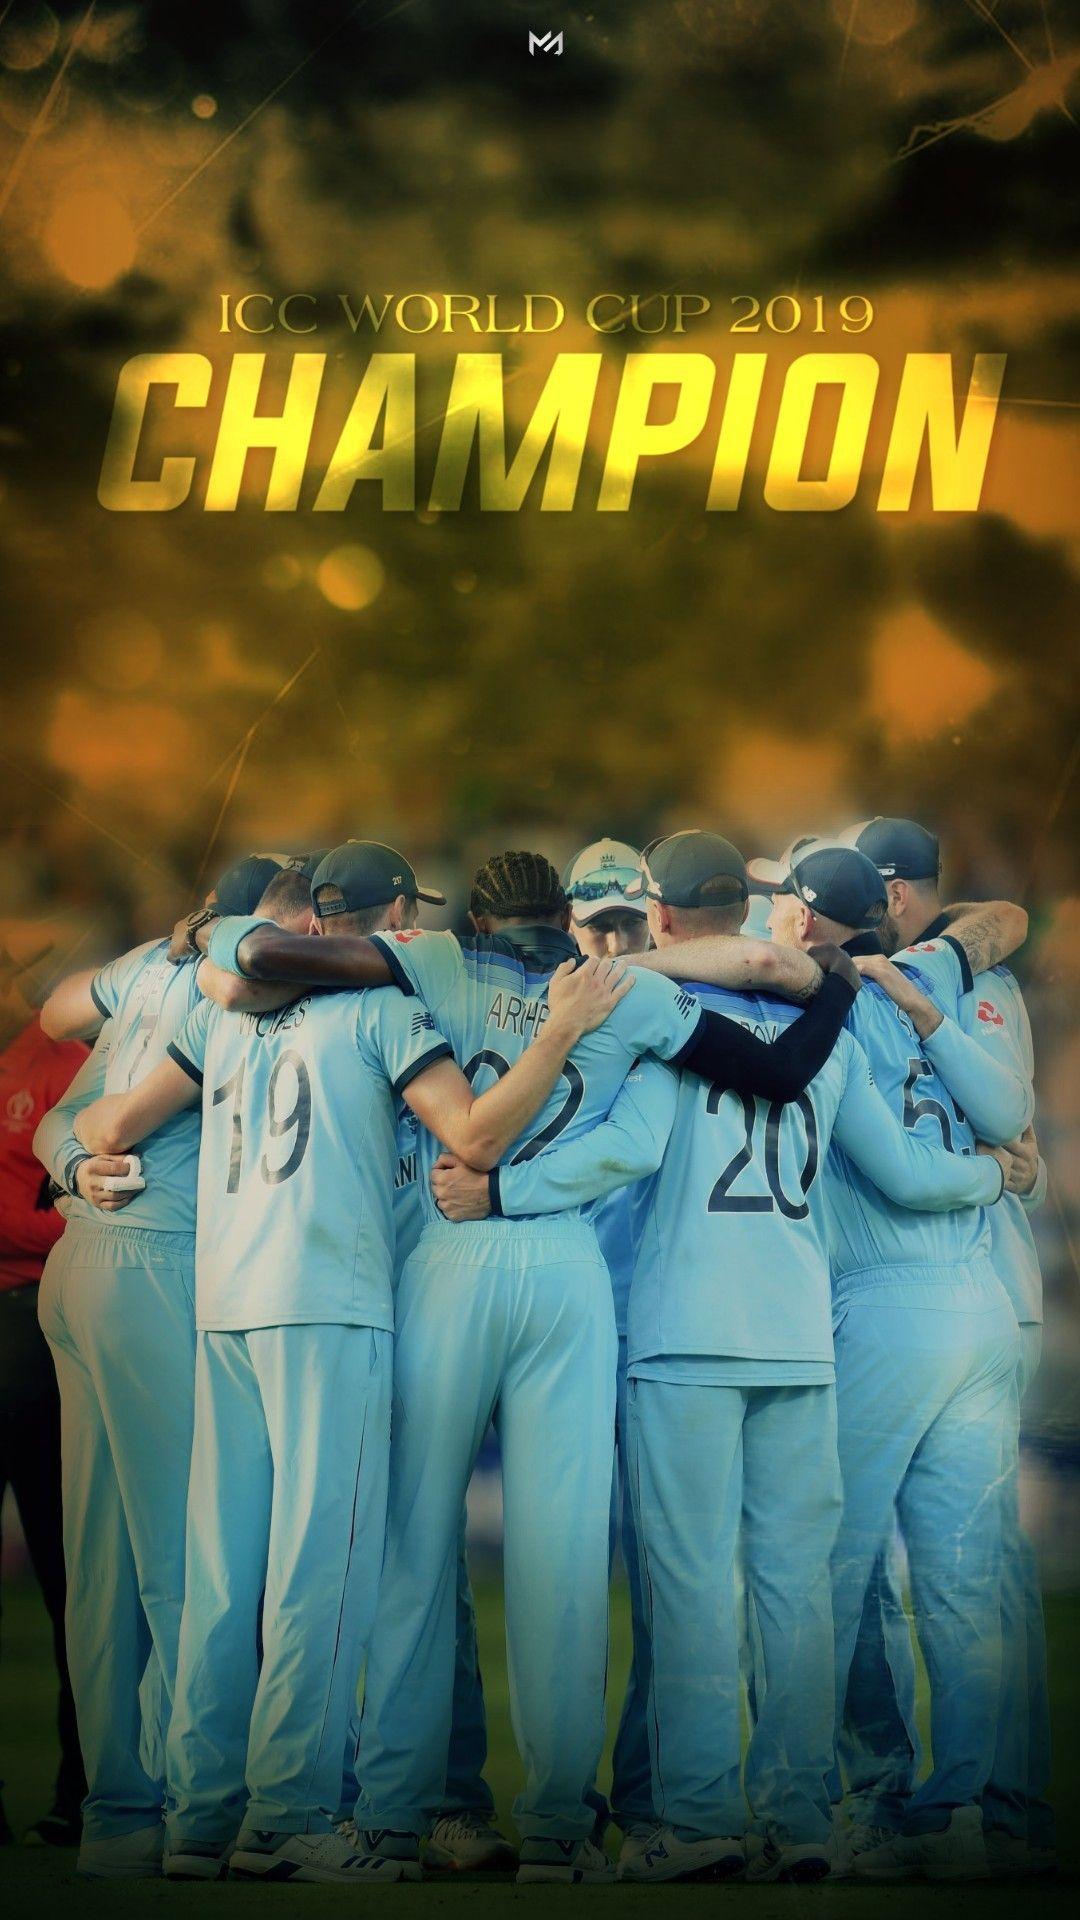 world cup champion England cricket team. Lock screen wallpaper. England cricket team, Cricket wallpaper, Team wallpaper